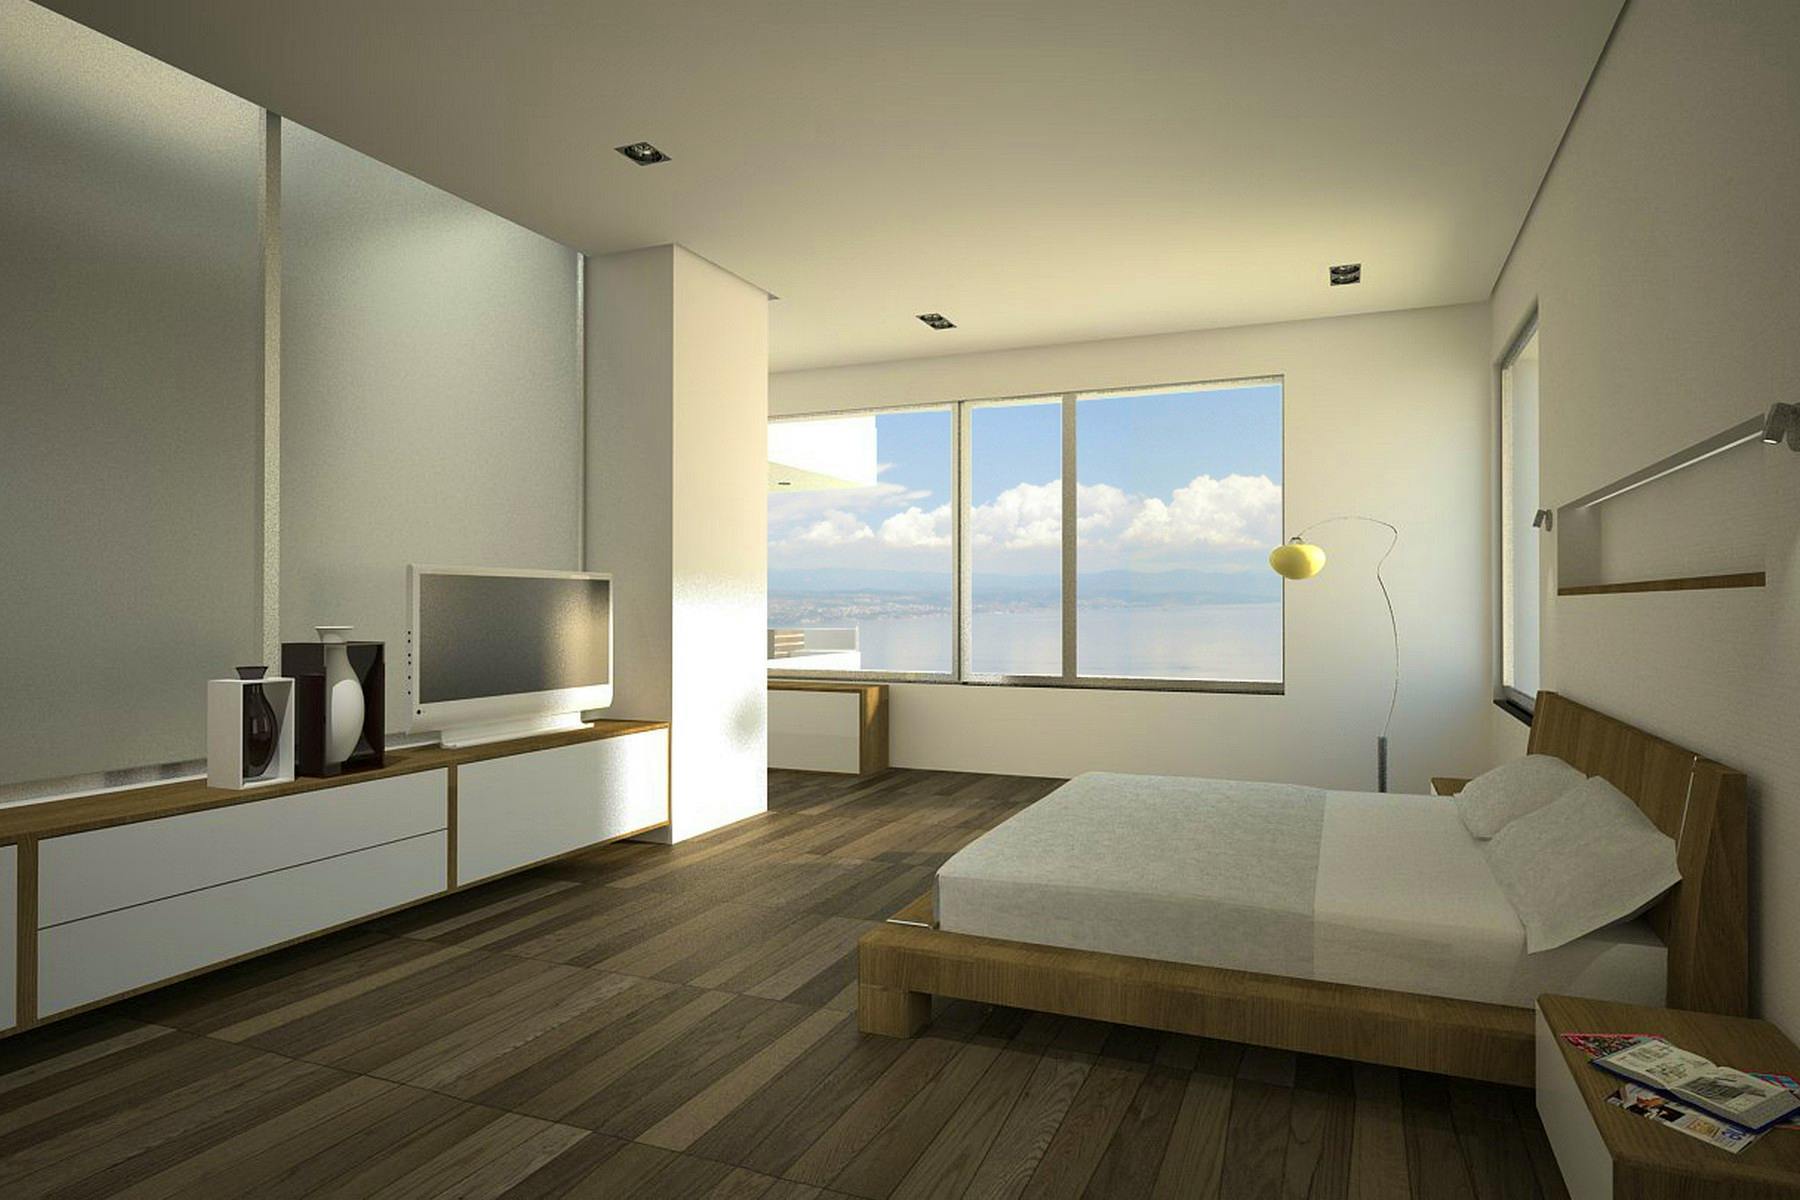 En suite bedroom with the sea view